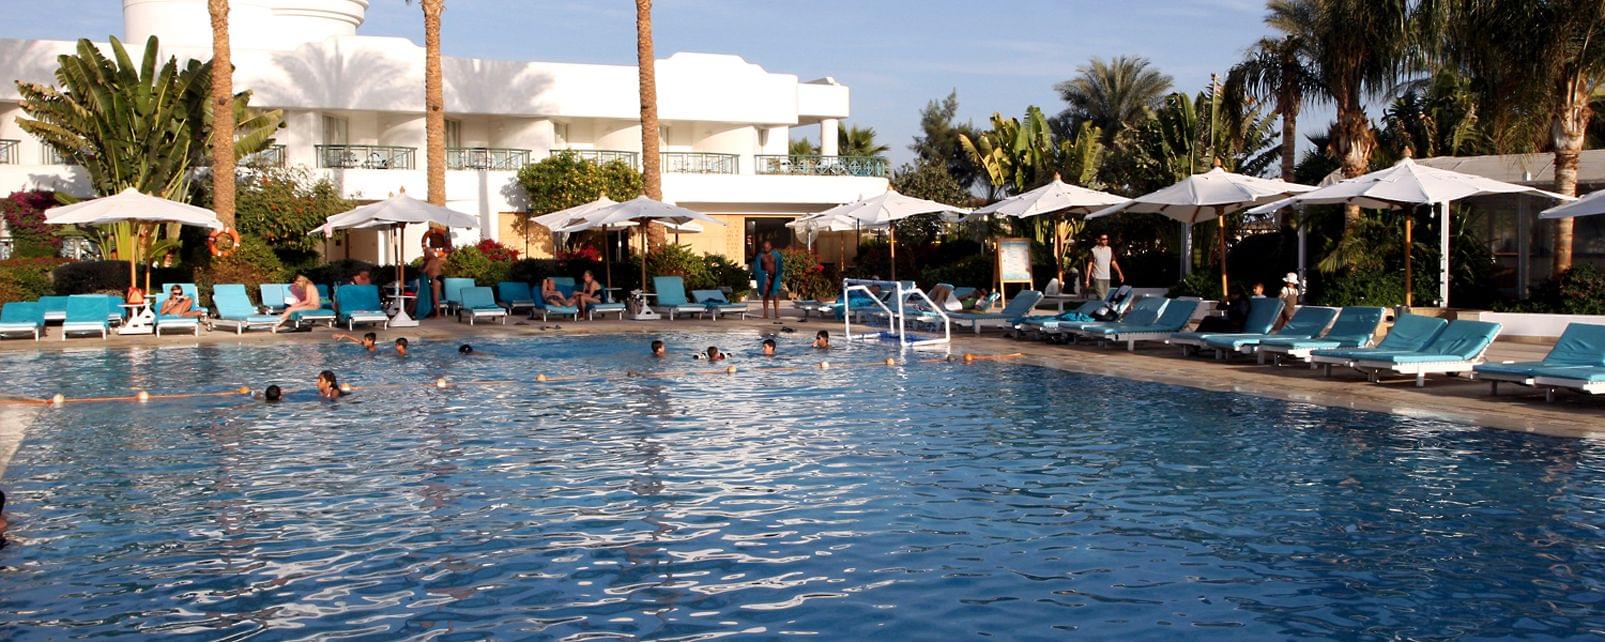 1581191239 735 Choose your favorite resort in Sharm El Sheikh - Choose your favorite resort in Sharm El Sheikh